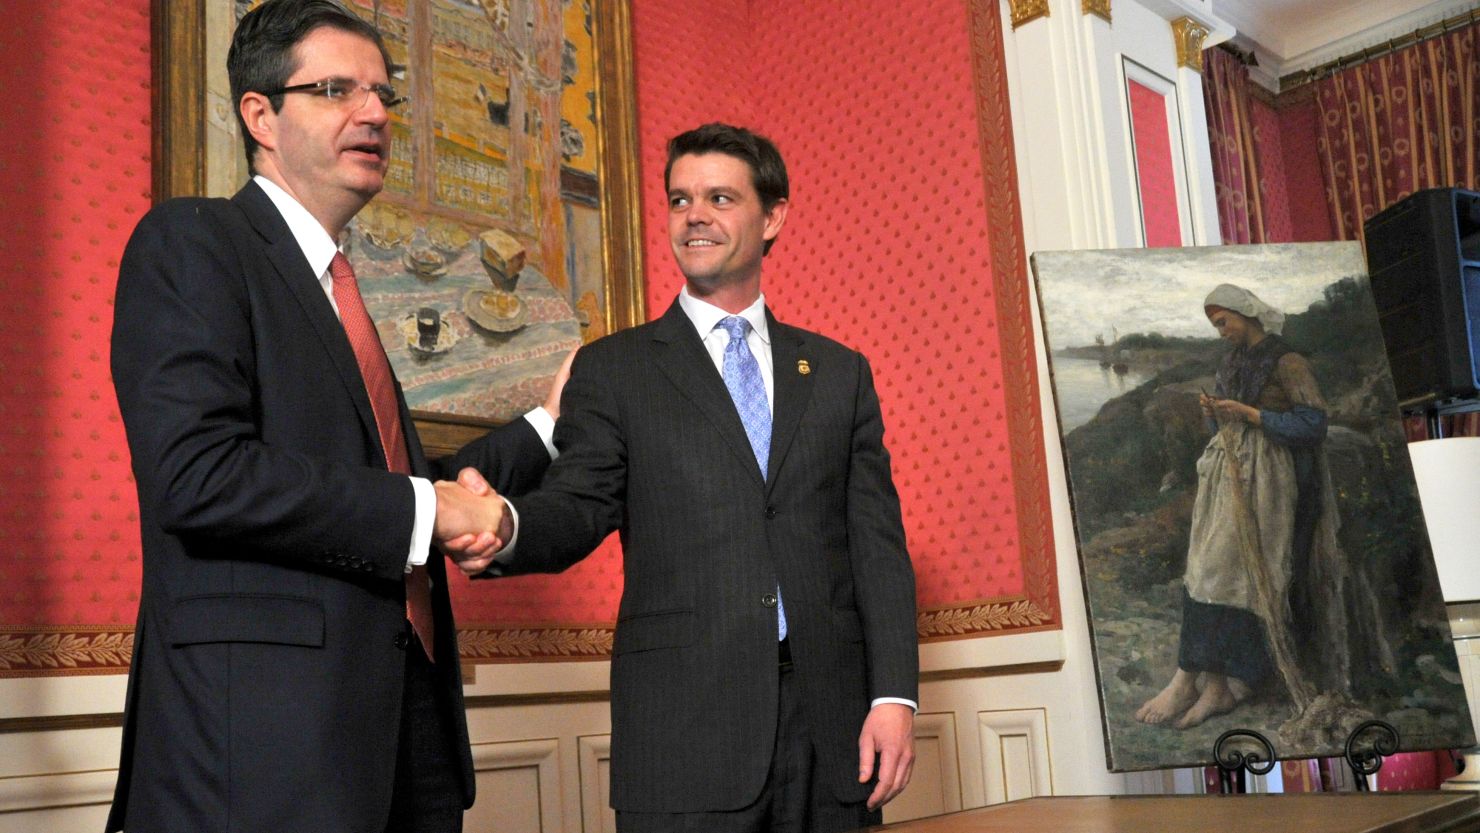 French Ambassador François Delattre, left, shakes hands with ICE Director John Morton during the ceremony Thursday.